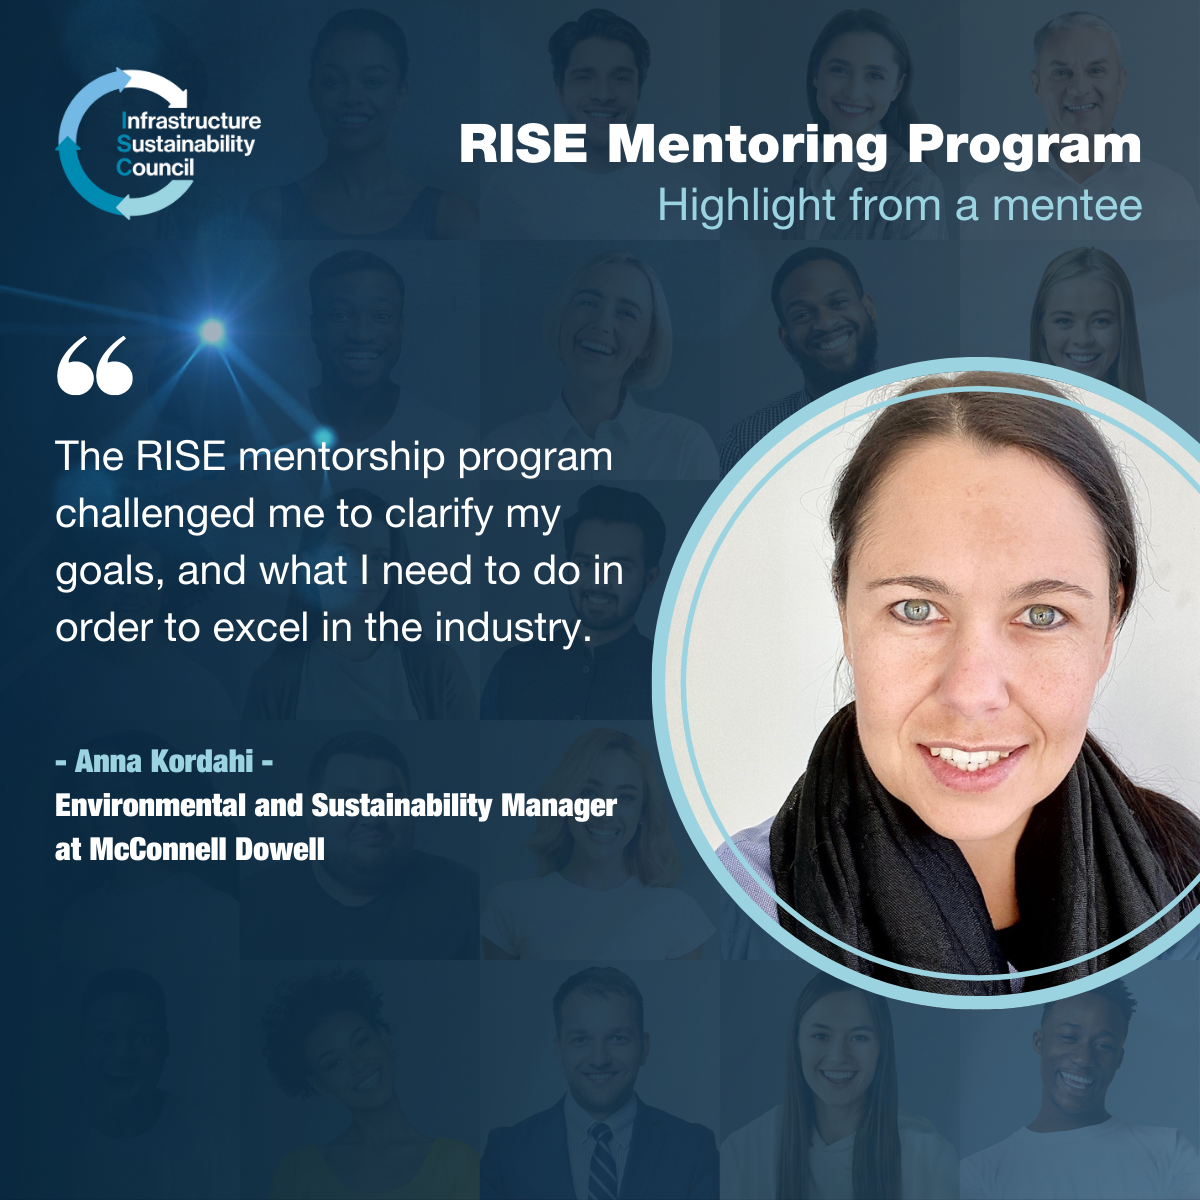 RISE Mentoring Program - ISCouncil